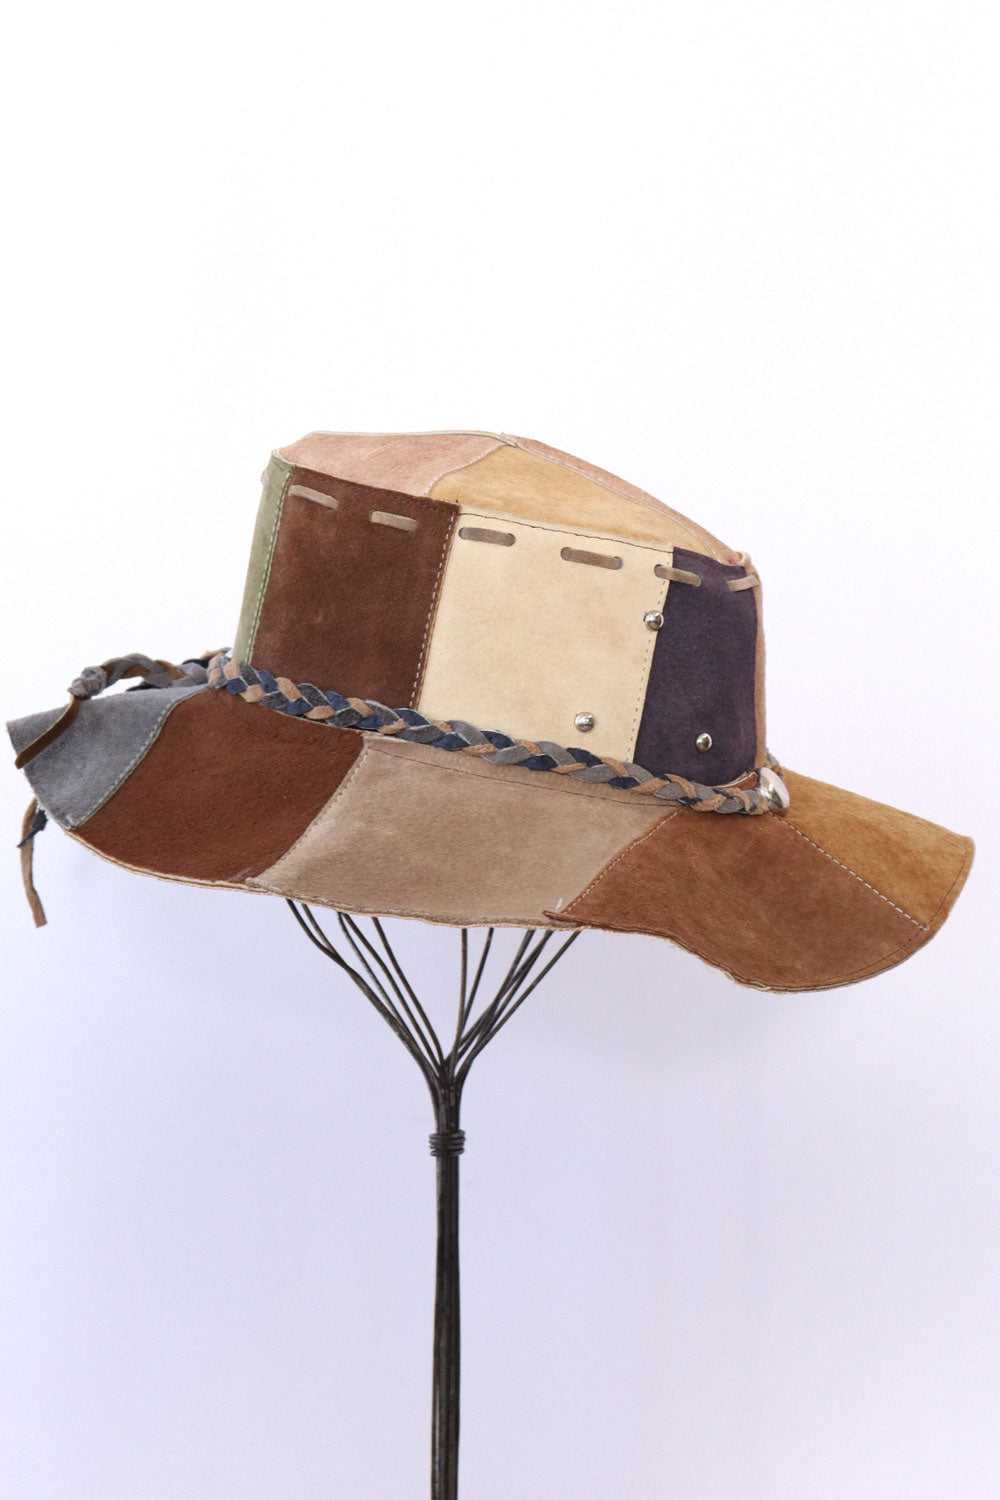 Patchwork Leather Braided Tassel Hat - image 4